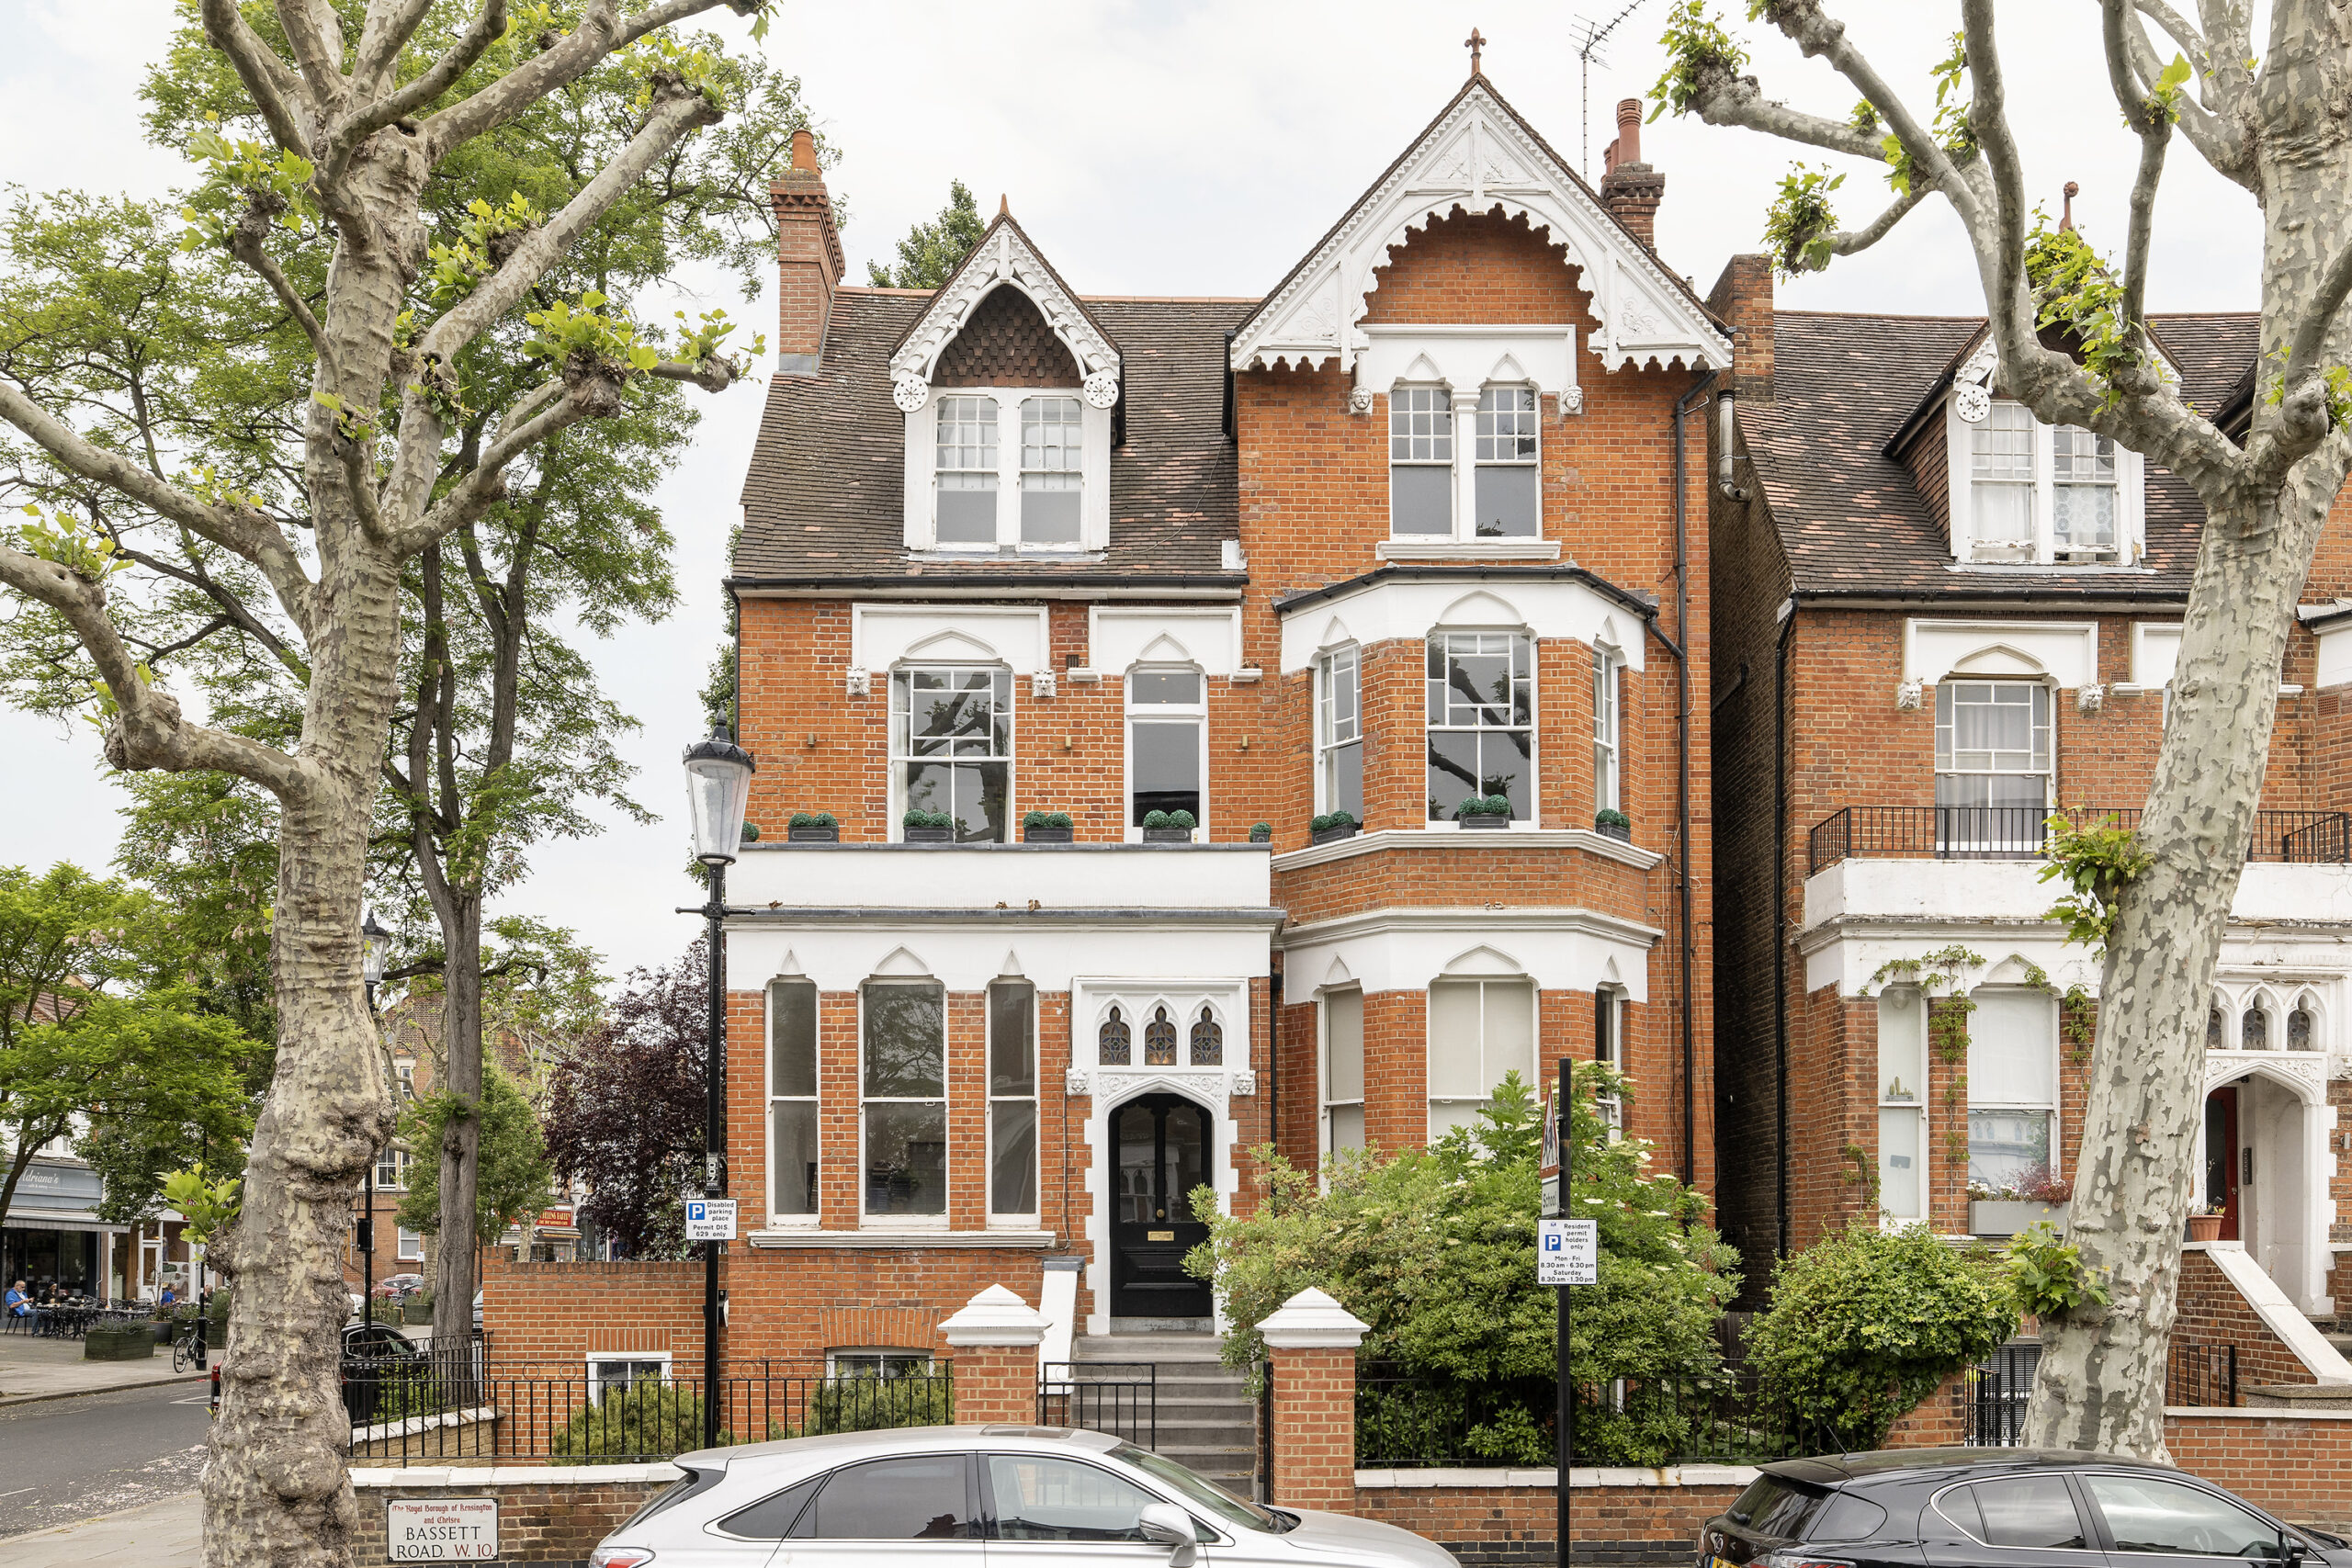 Domus-Nova-London-Property-For-Sales-Flat4-66-Bassett-Road-25_Lo